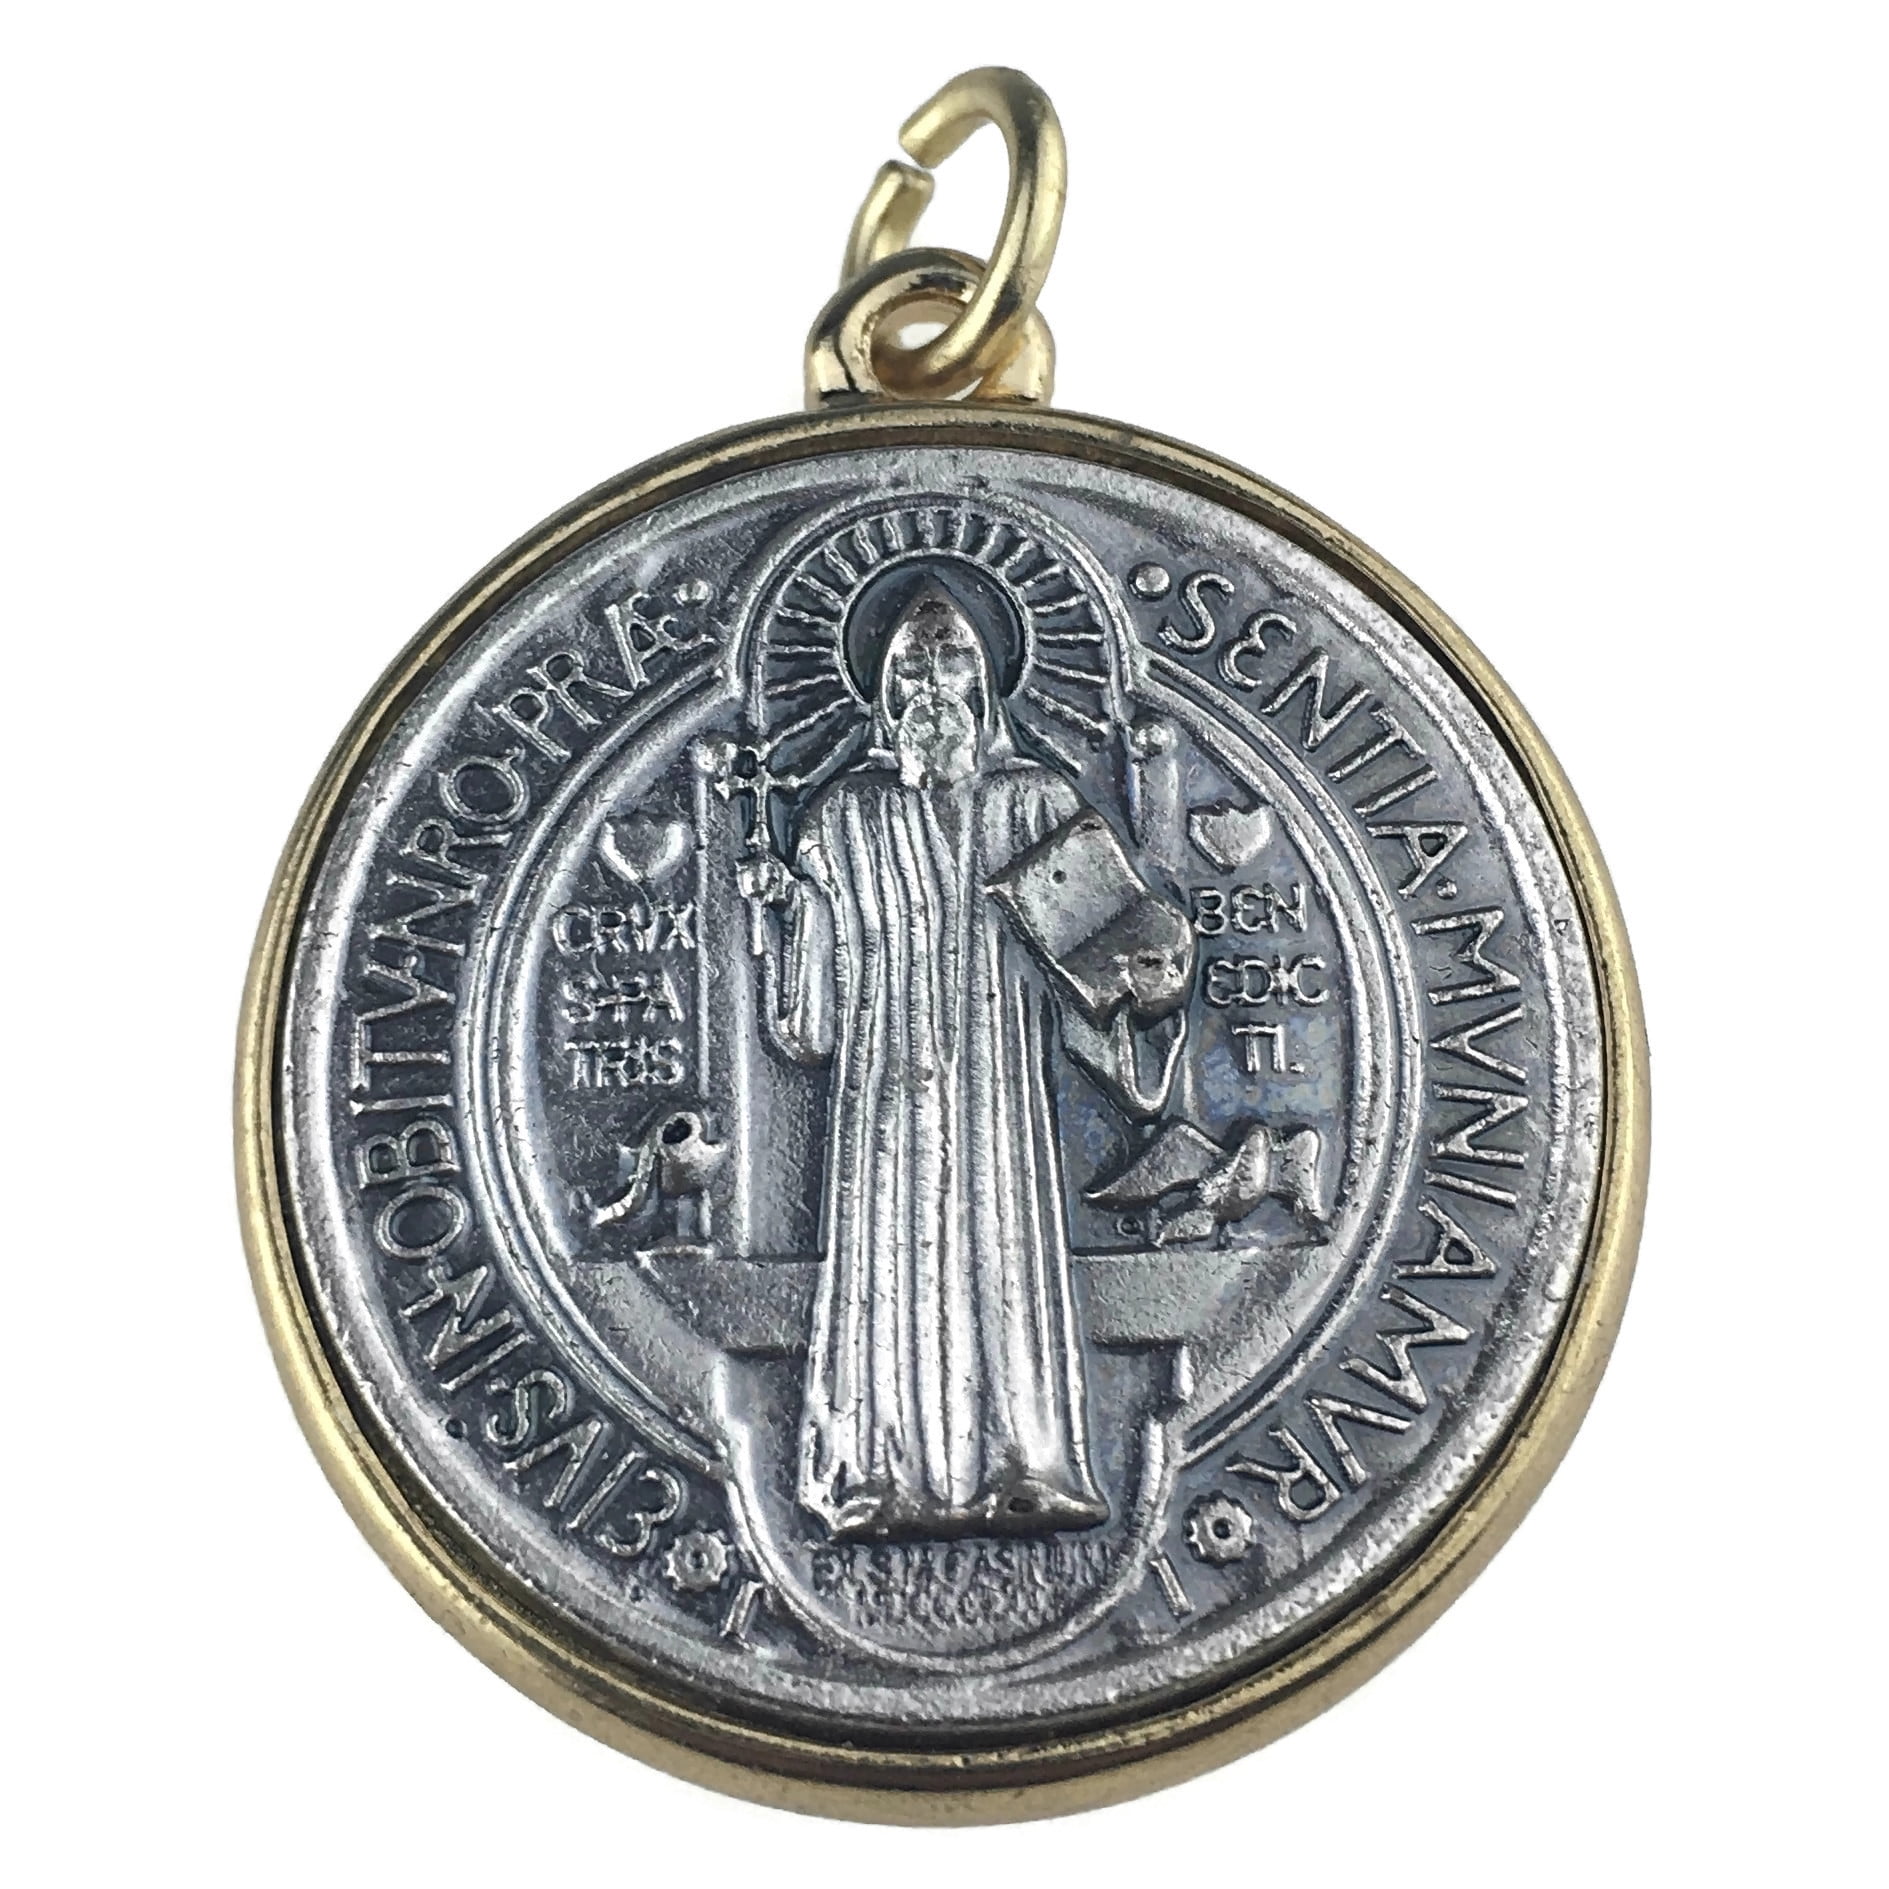 10 BULK Medallas San Benito St. Benedict Medals Catholic Christian 0.75